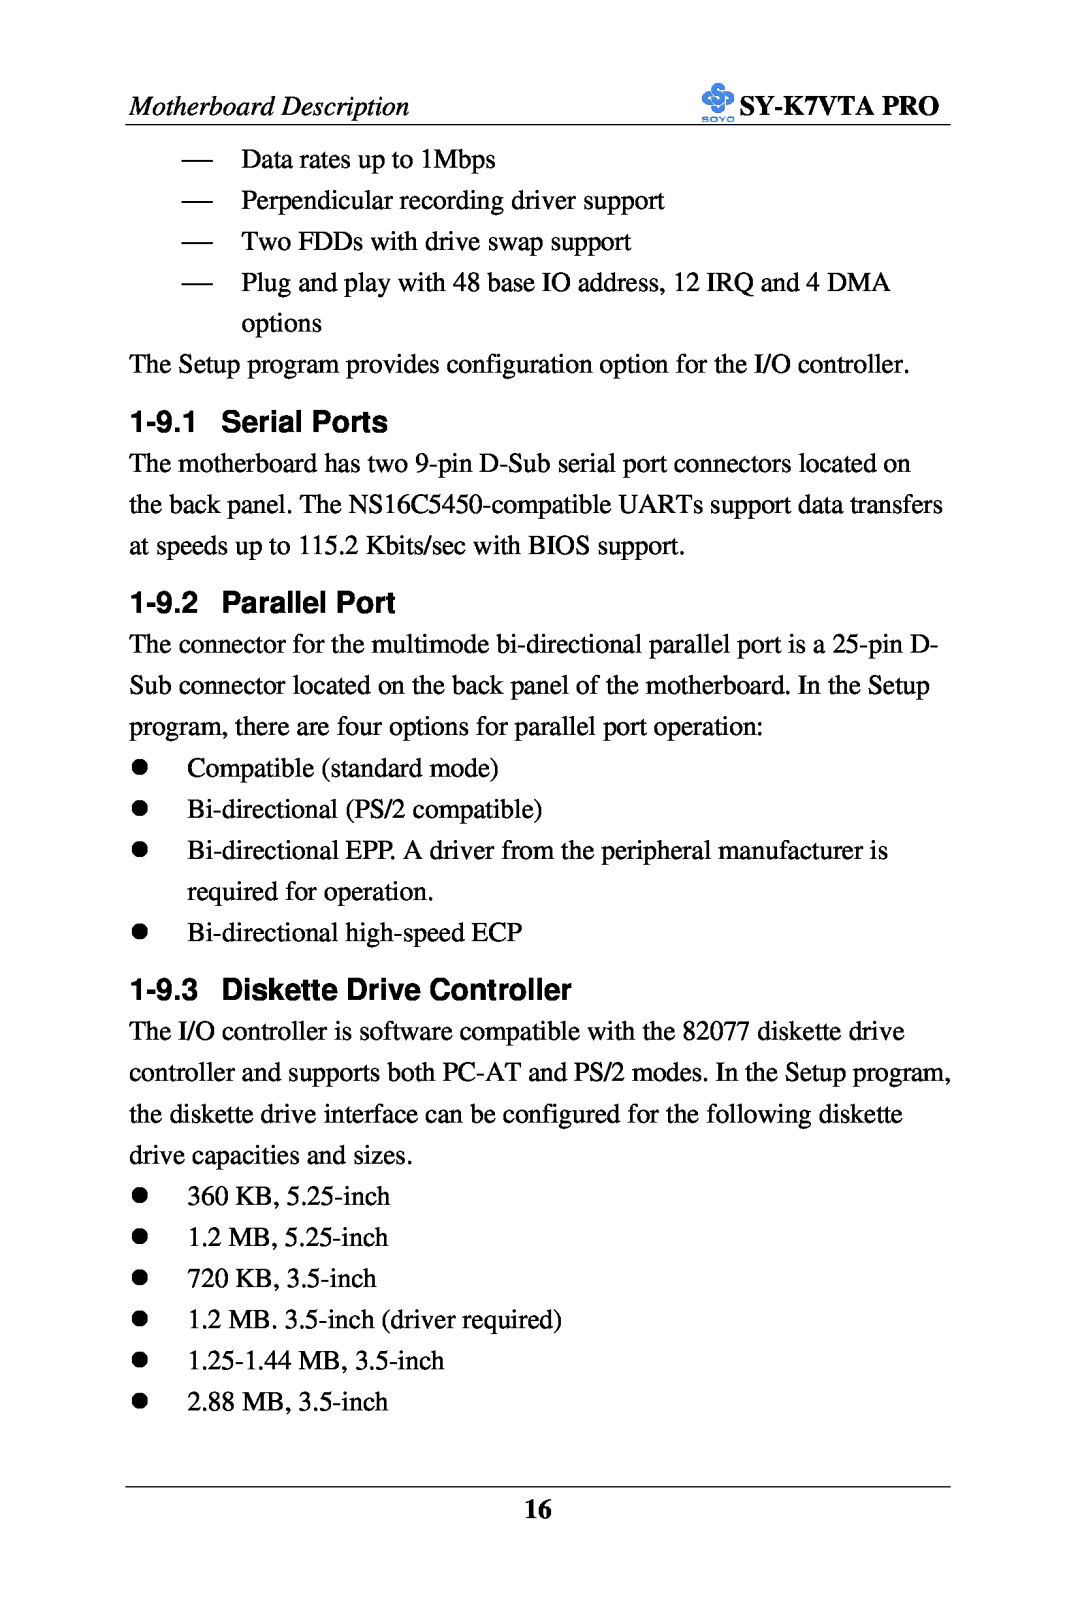 SOYO SY-K7VTA PRO user manual Serial Ports, Parallel Port, Diskette Drive Controller, Motherboard Description 